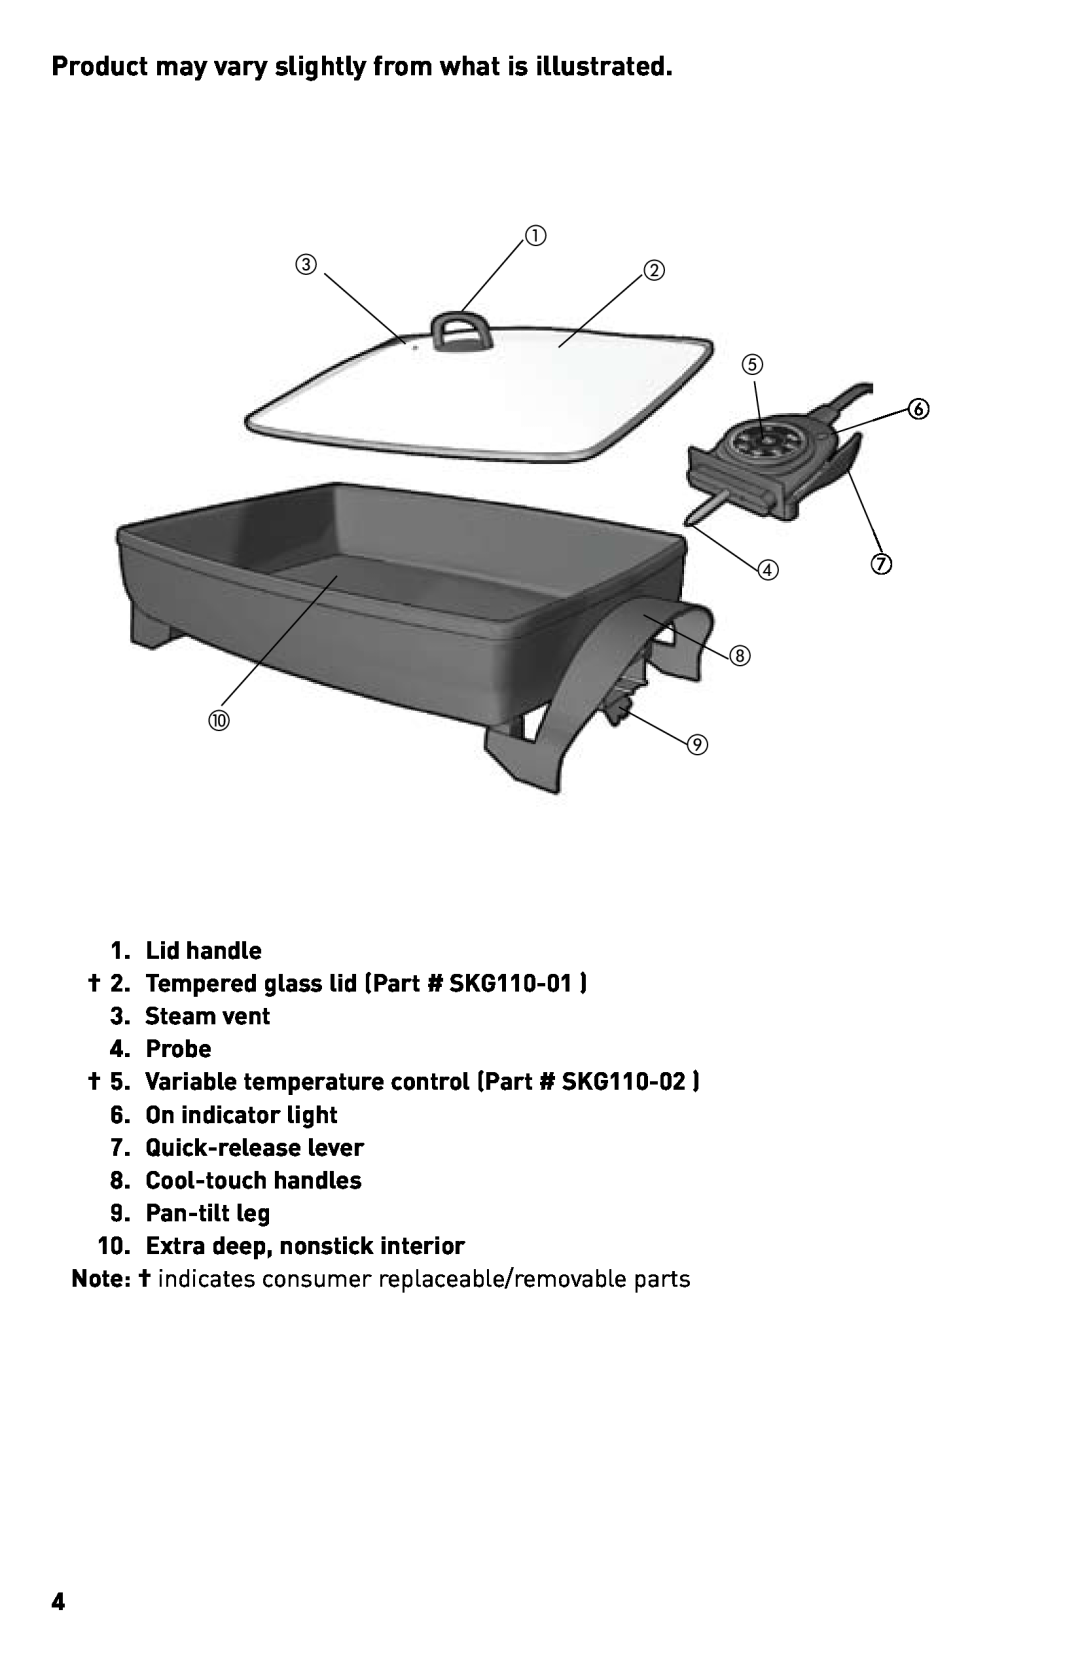 Black & Decker SKG110C Lid handle, †2. Tempered glass lid SKG110-01, Steam vent 4.Probe, Cool-touchhandles 9.Pan-tiltleg 